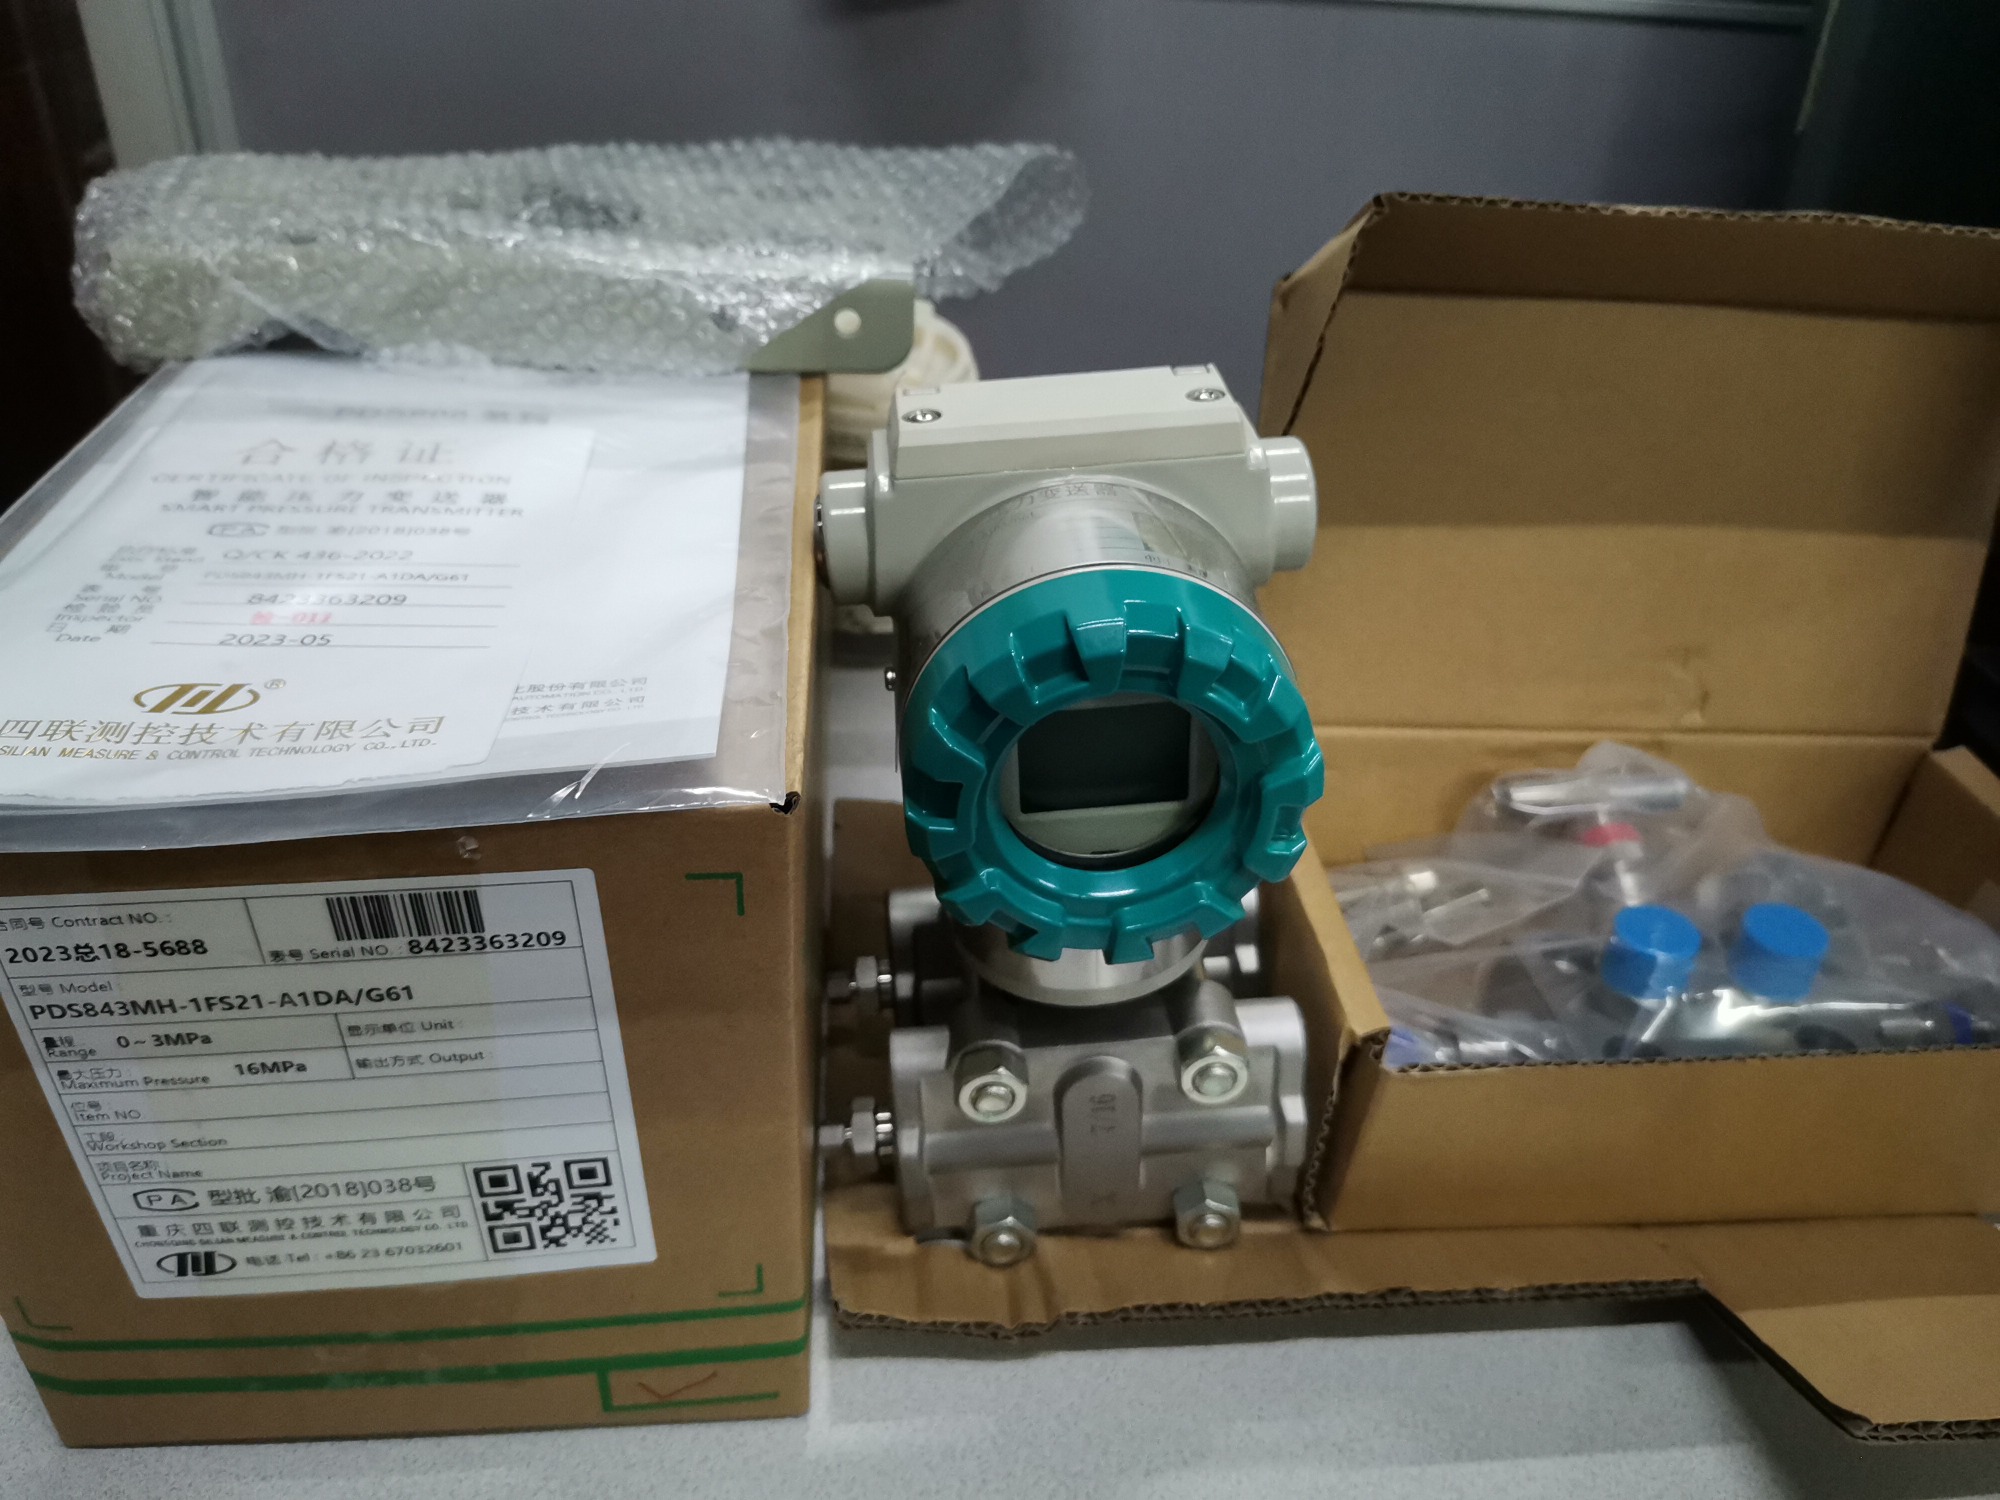 The order for pressure transmitter PDS843MH-1FS21-A1DA